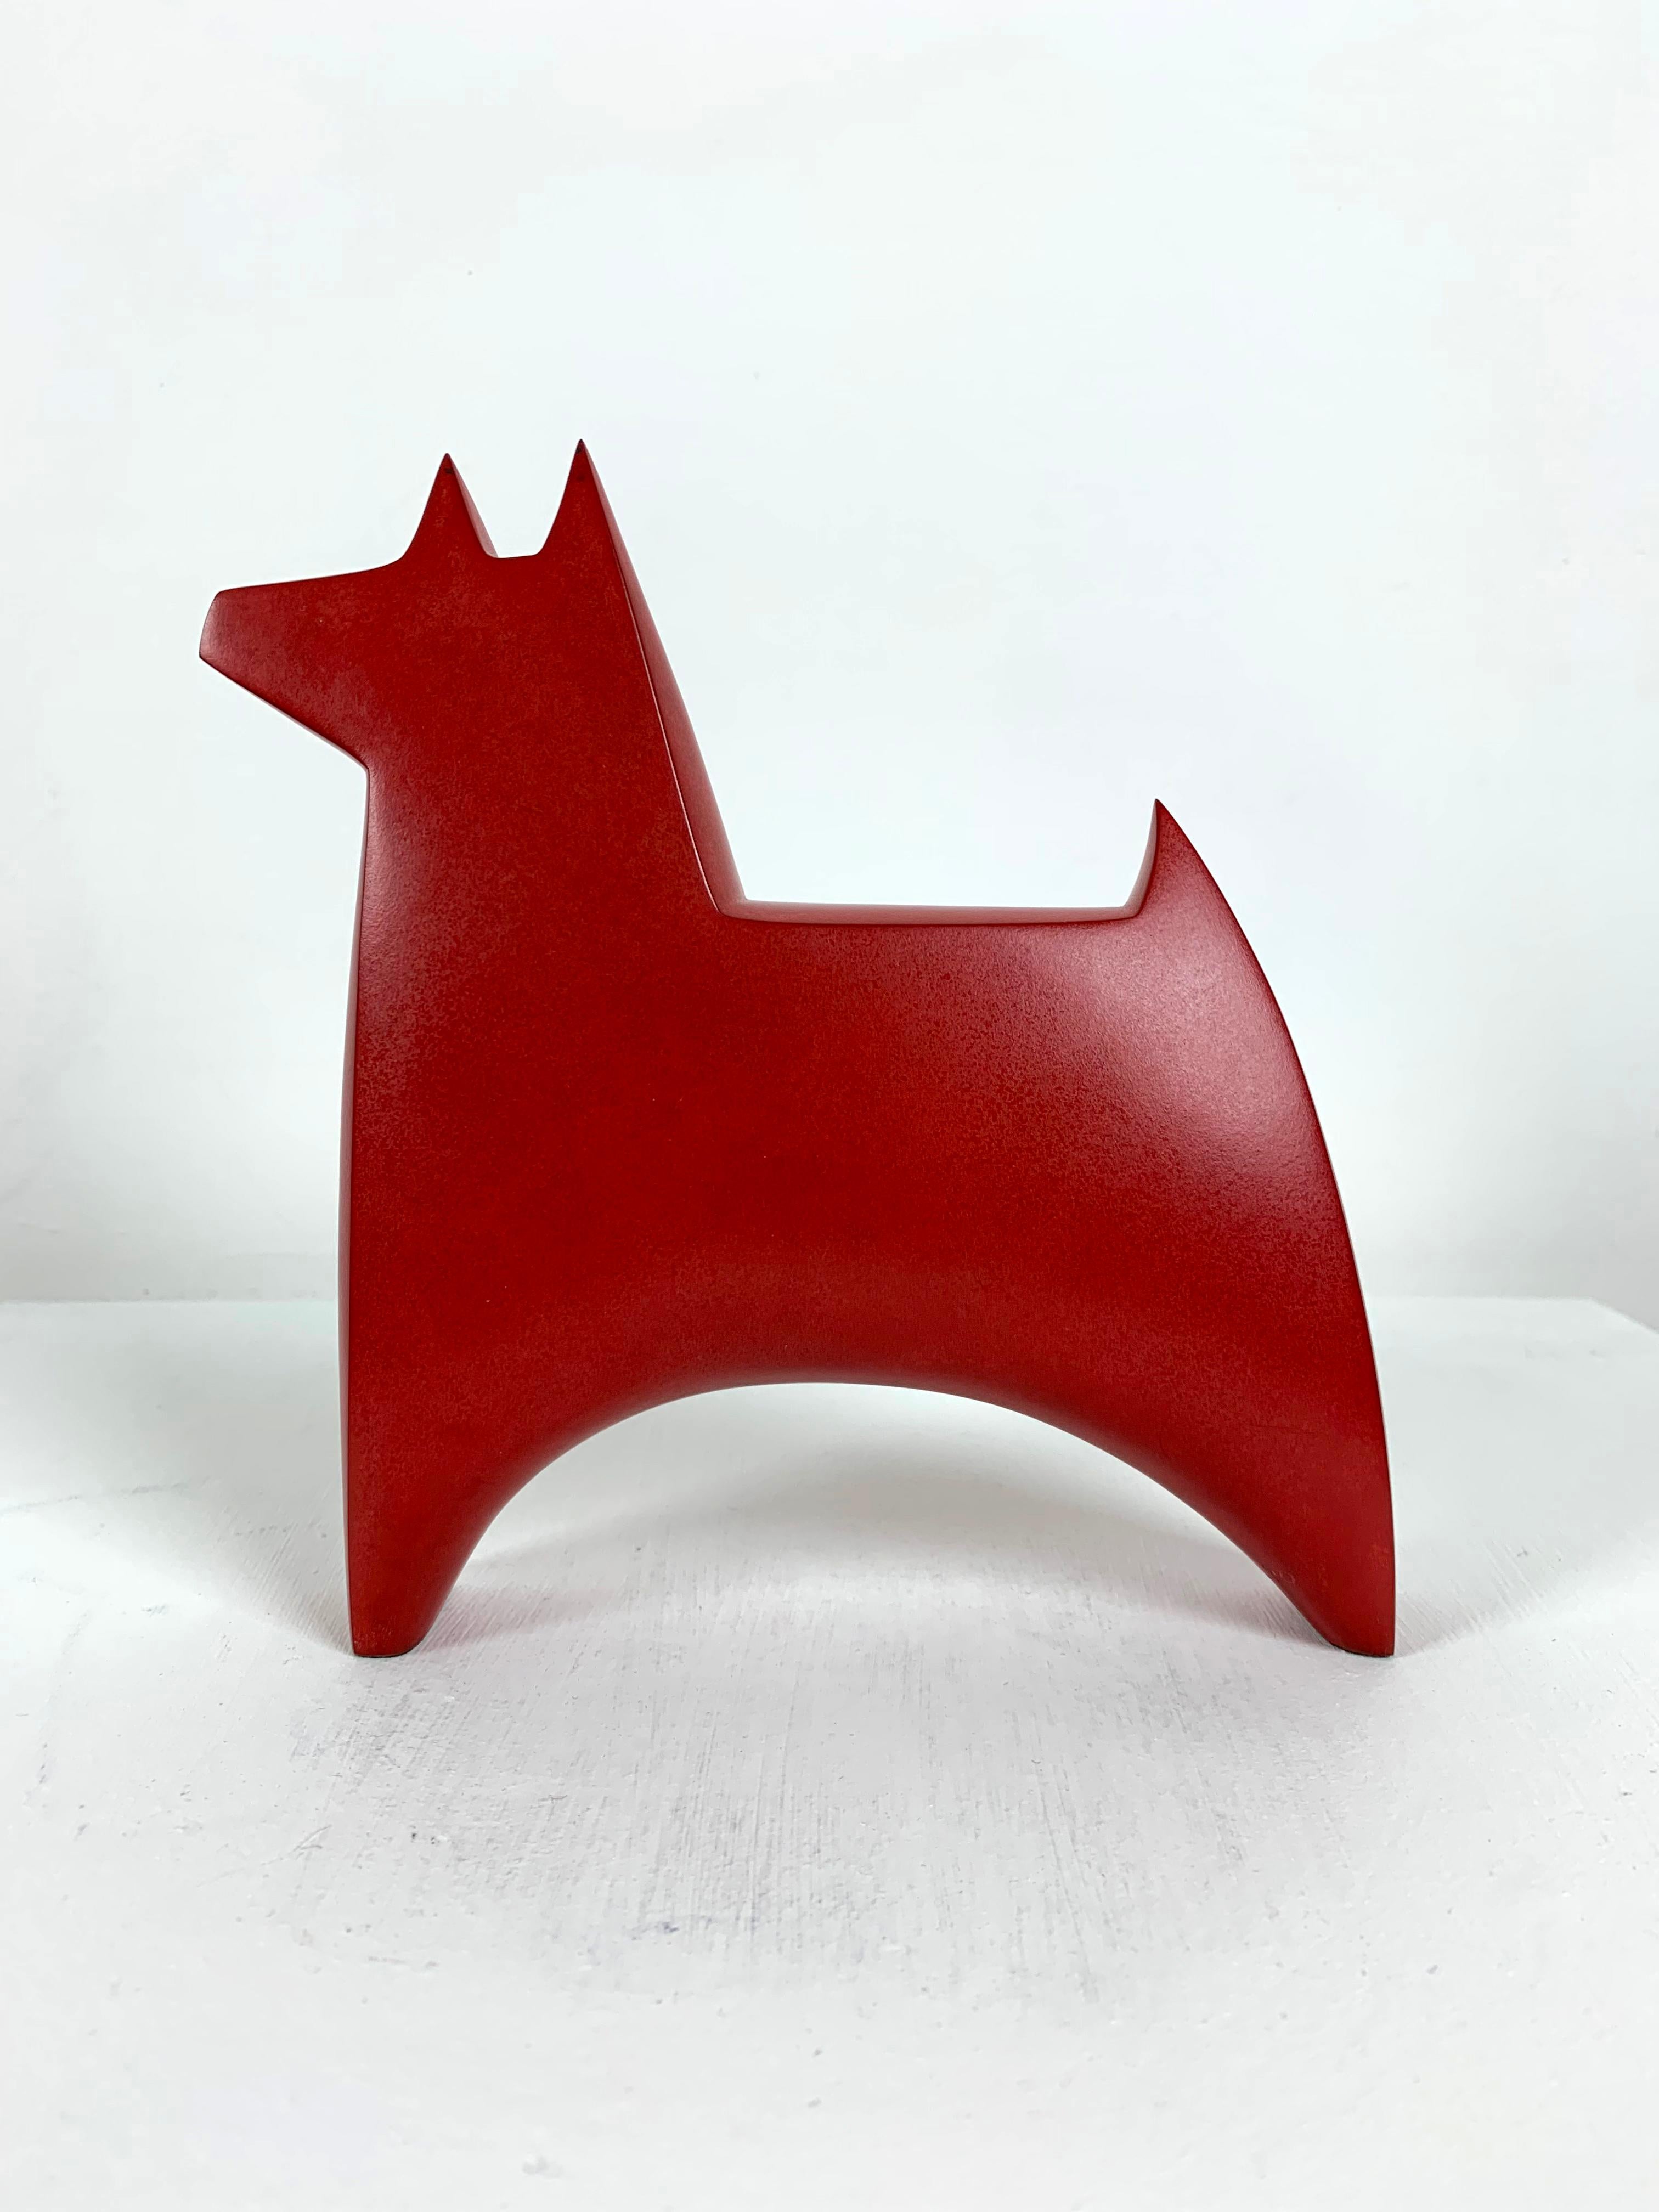 Stephen Page Figurative Sculpture - Dogstar